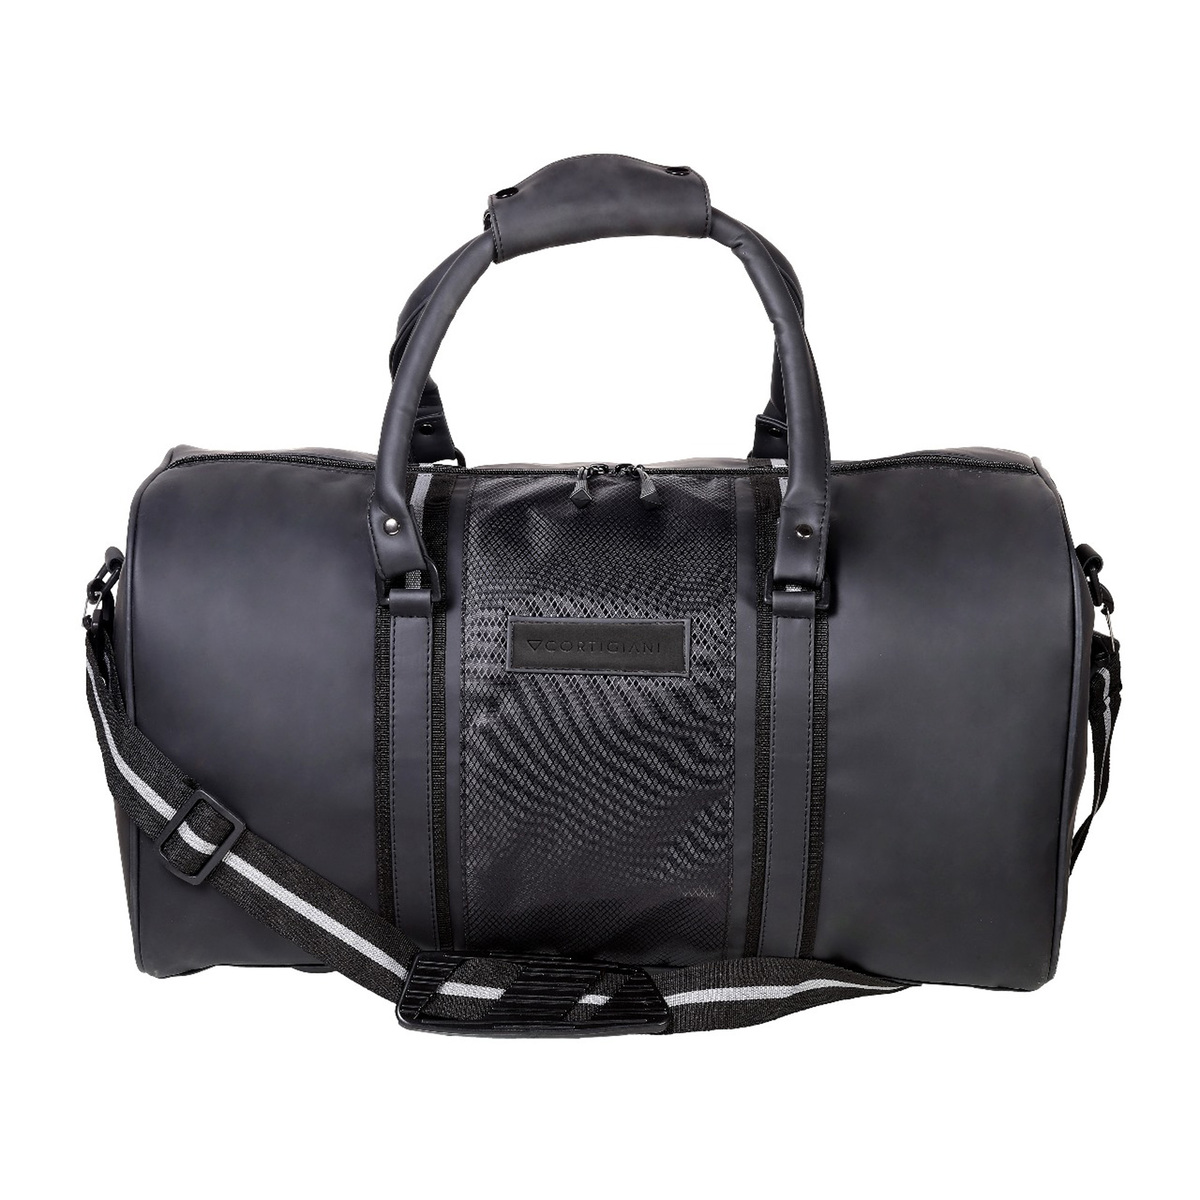 Cortigiani PU Duffle Bag CL035 21inch Online at Best Price | Travel ...